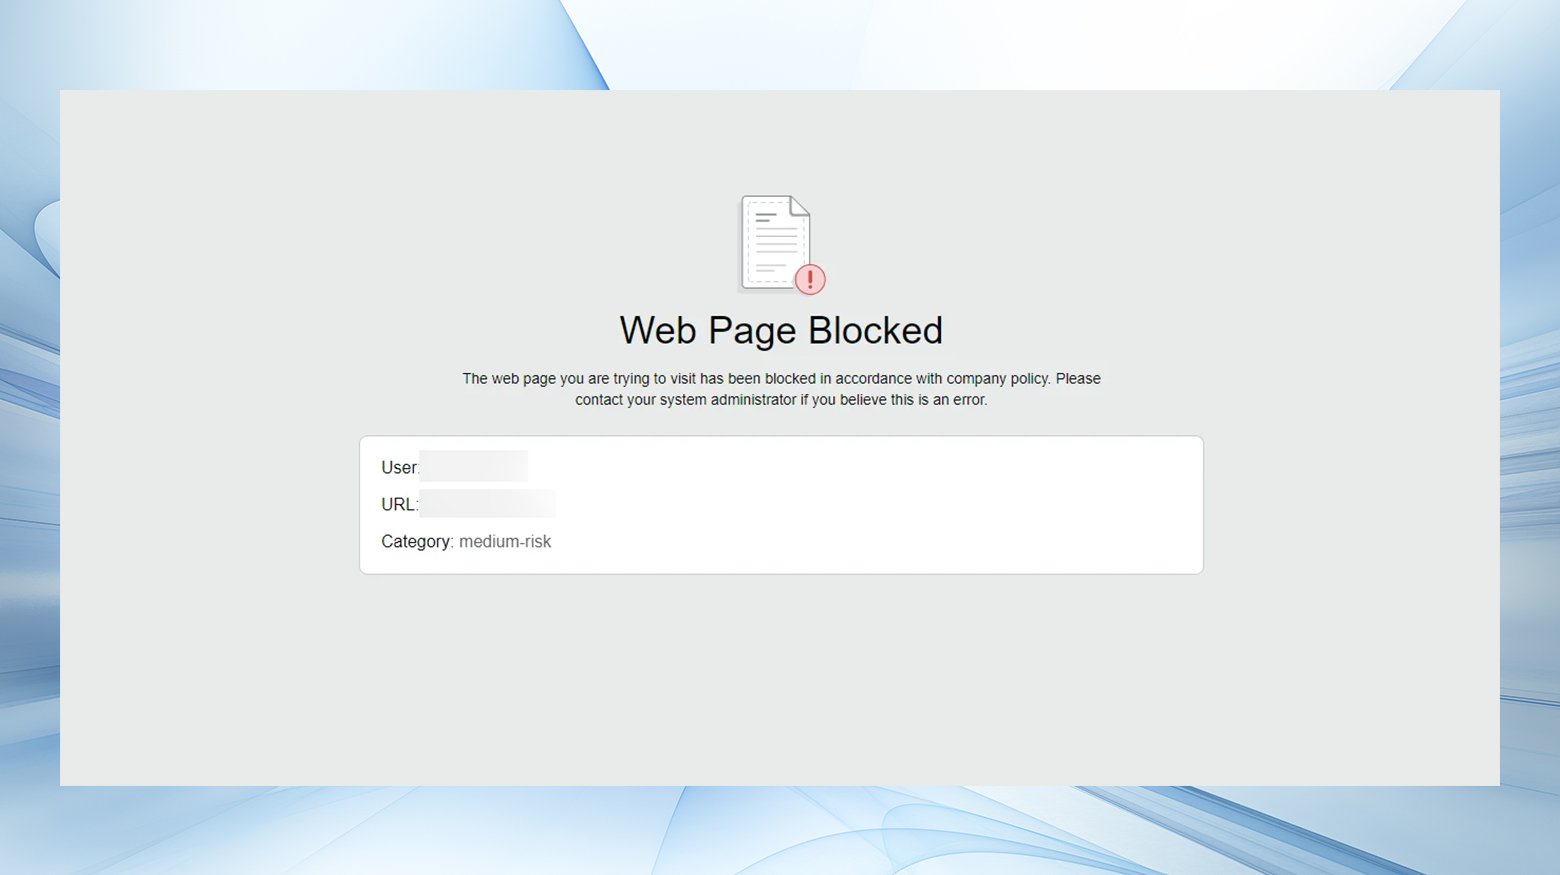 blocked website